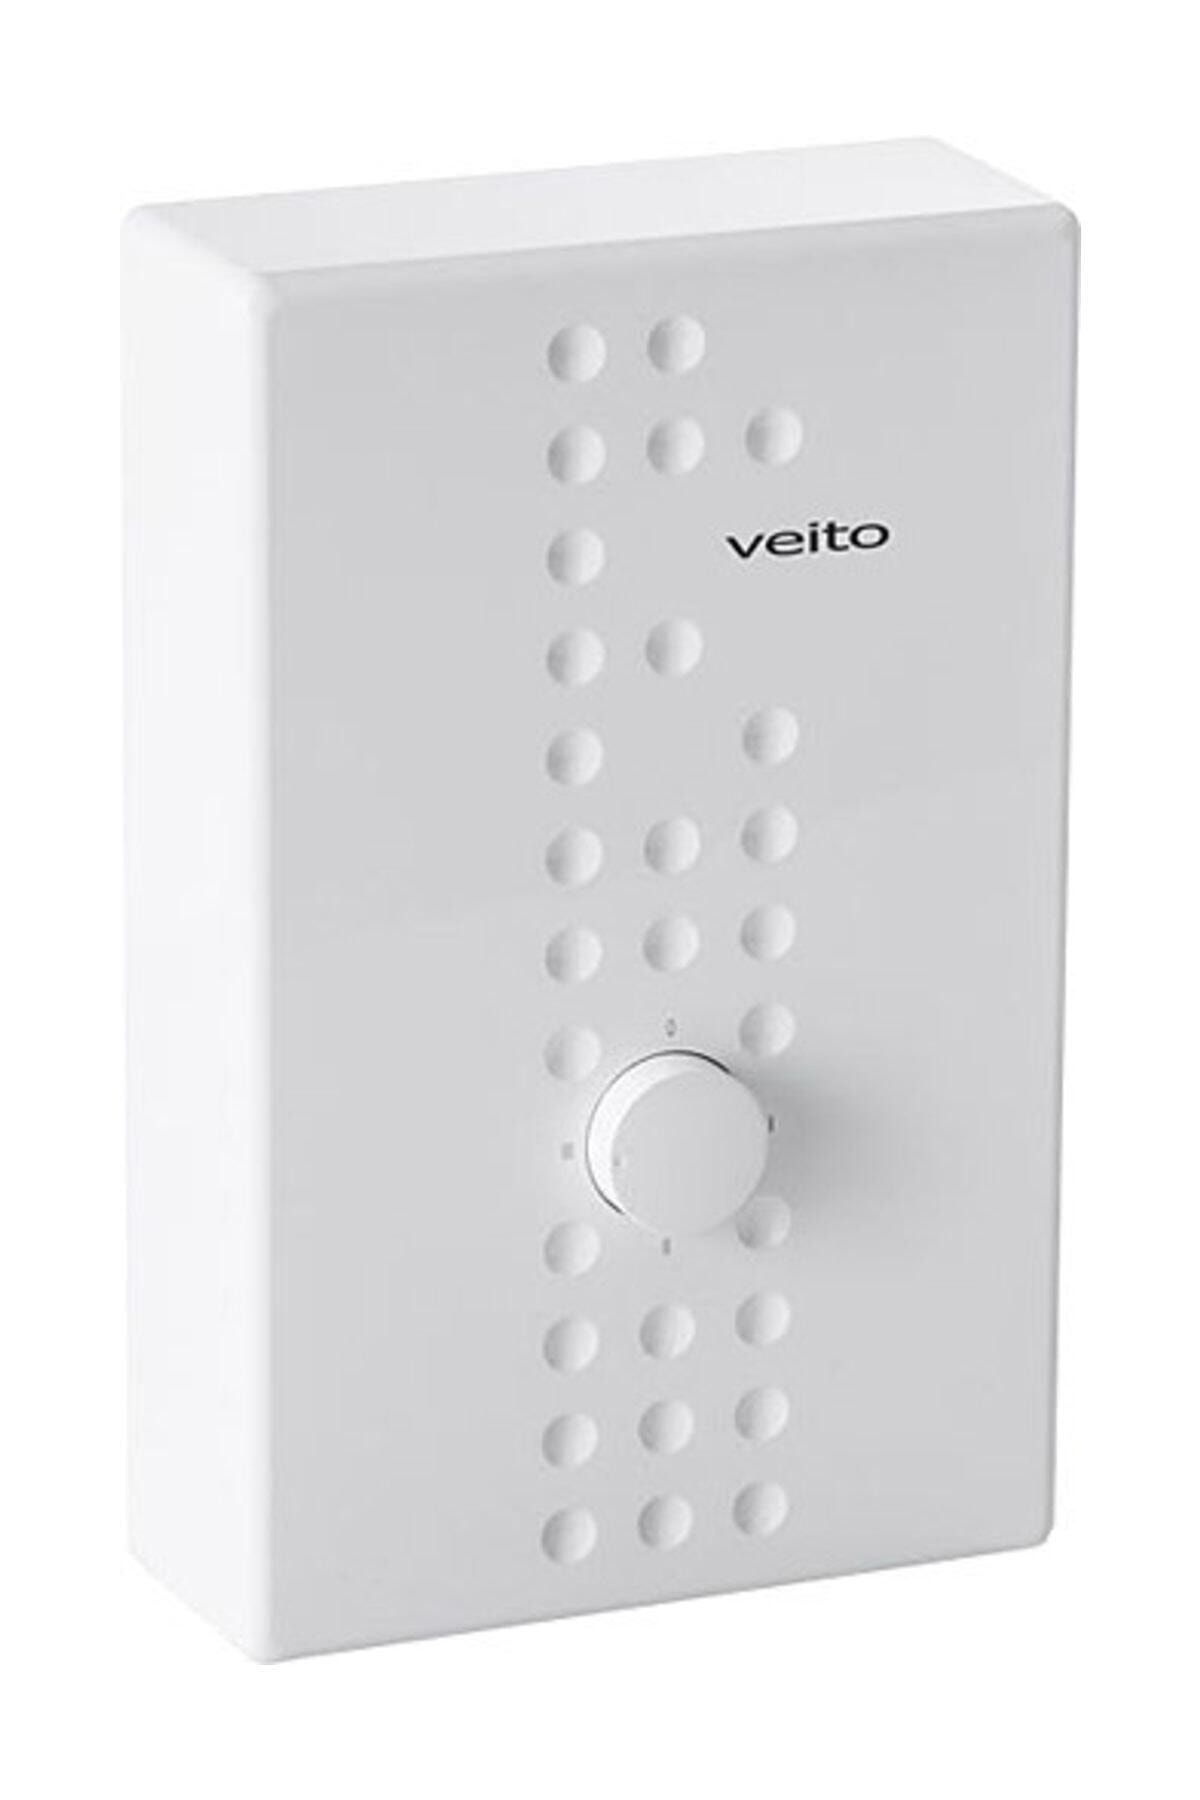 Veito Flow S 9000 Watt Monofaze Su Isıtıcı Merkezi Sistem Şofben